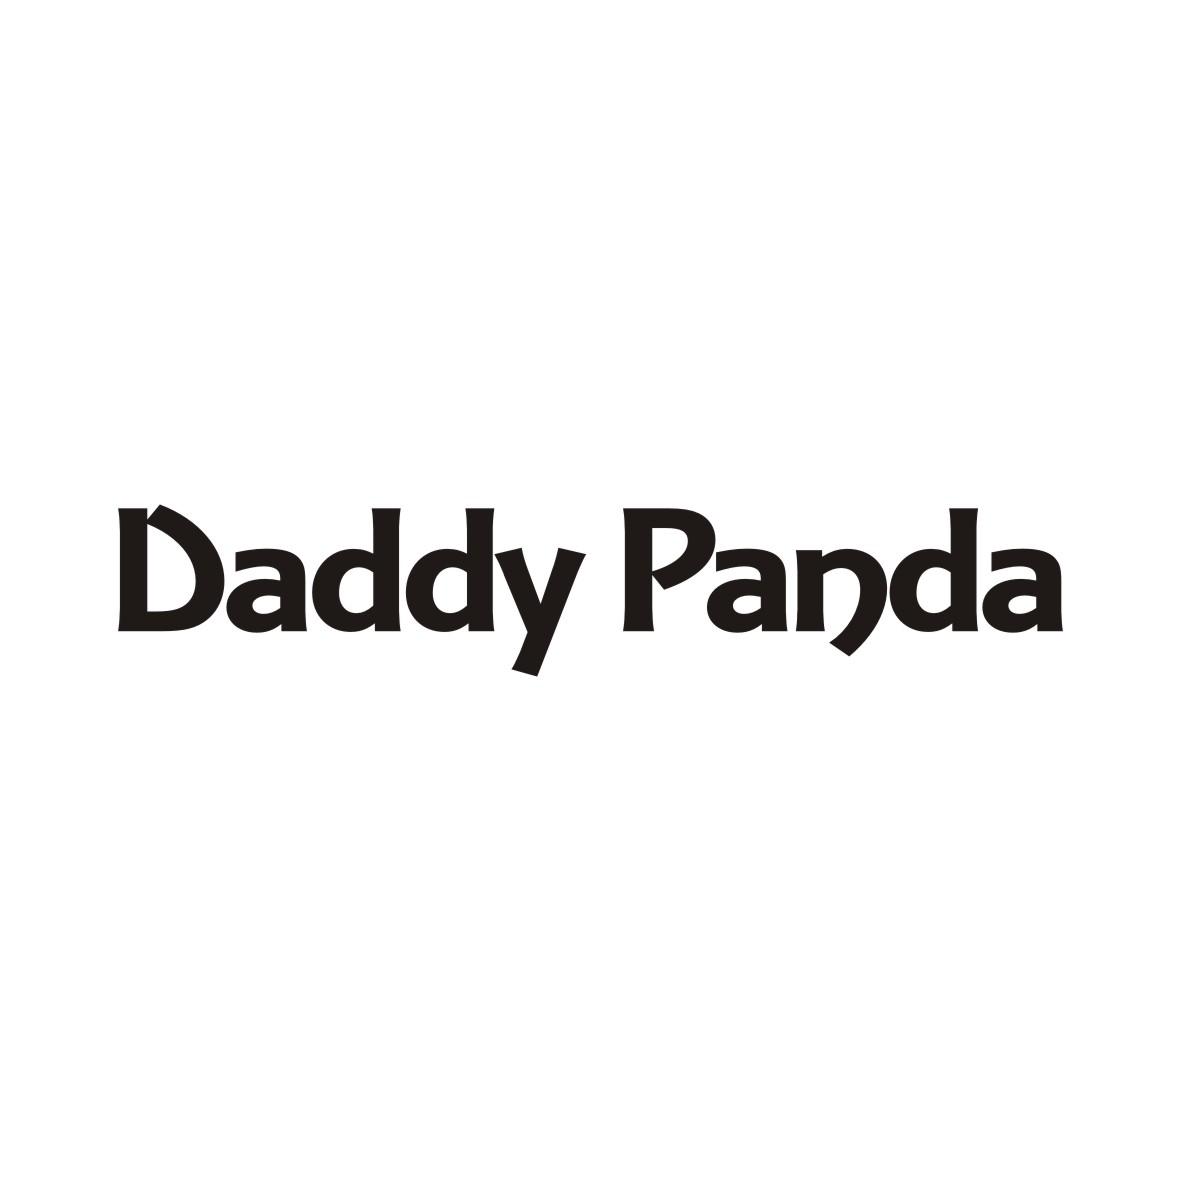 DADDY PANDA商标转让